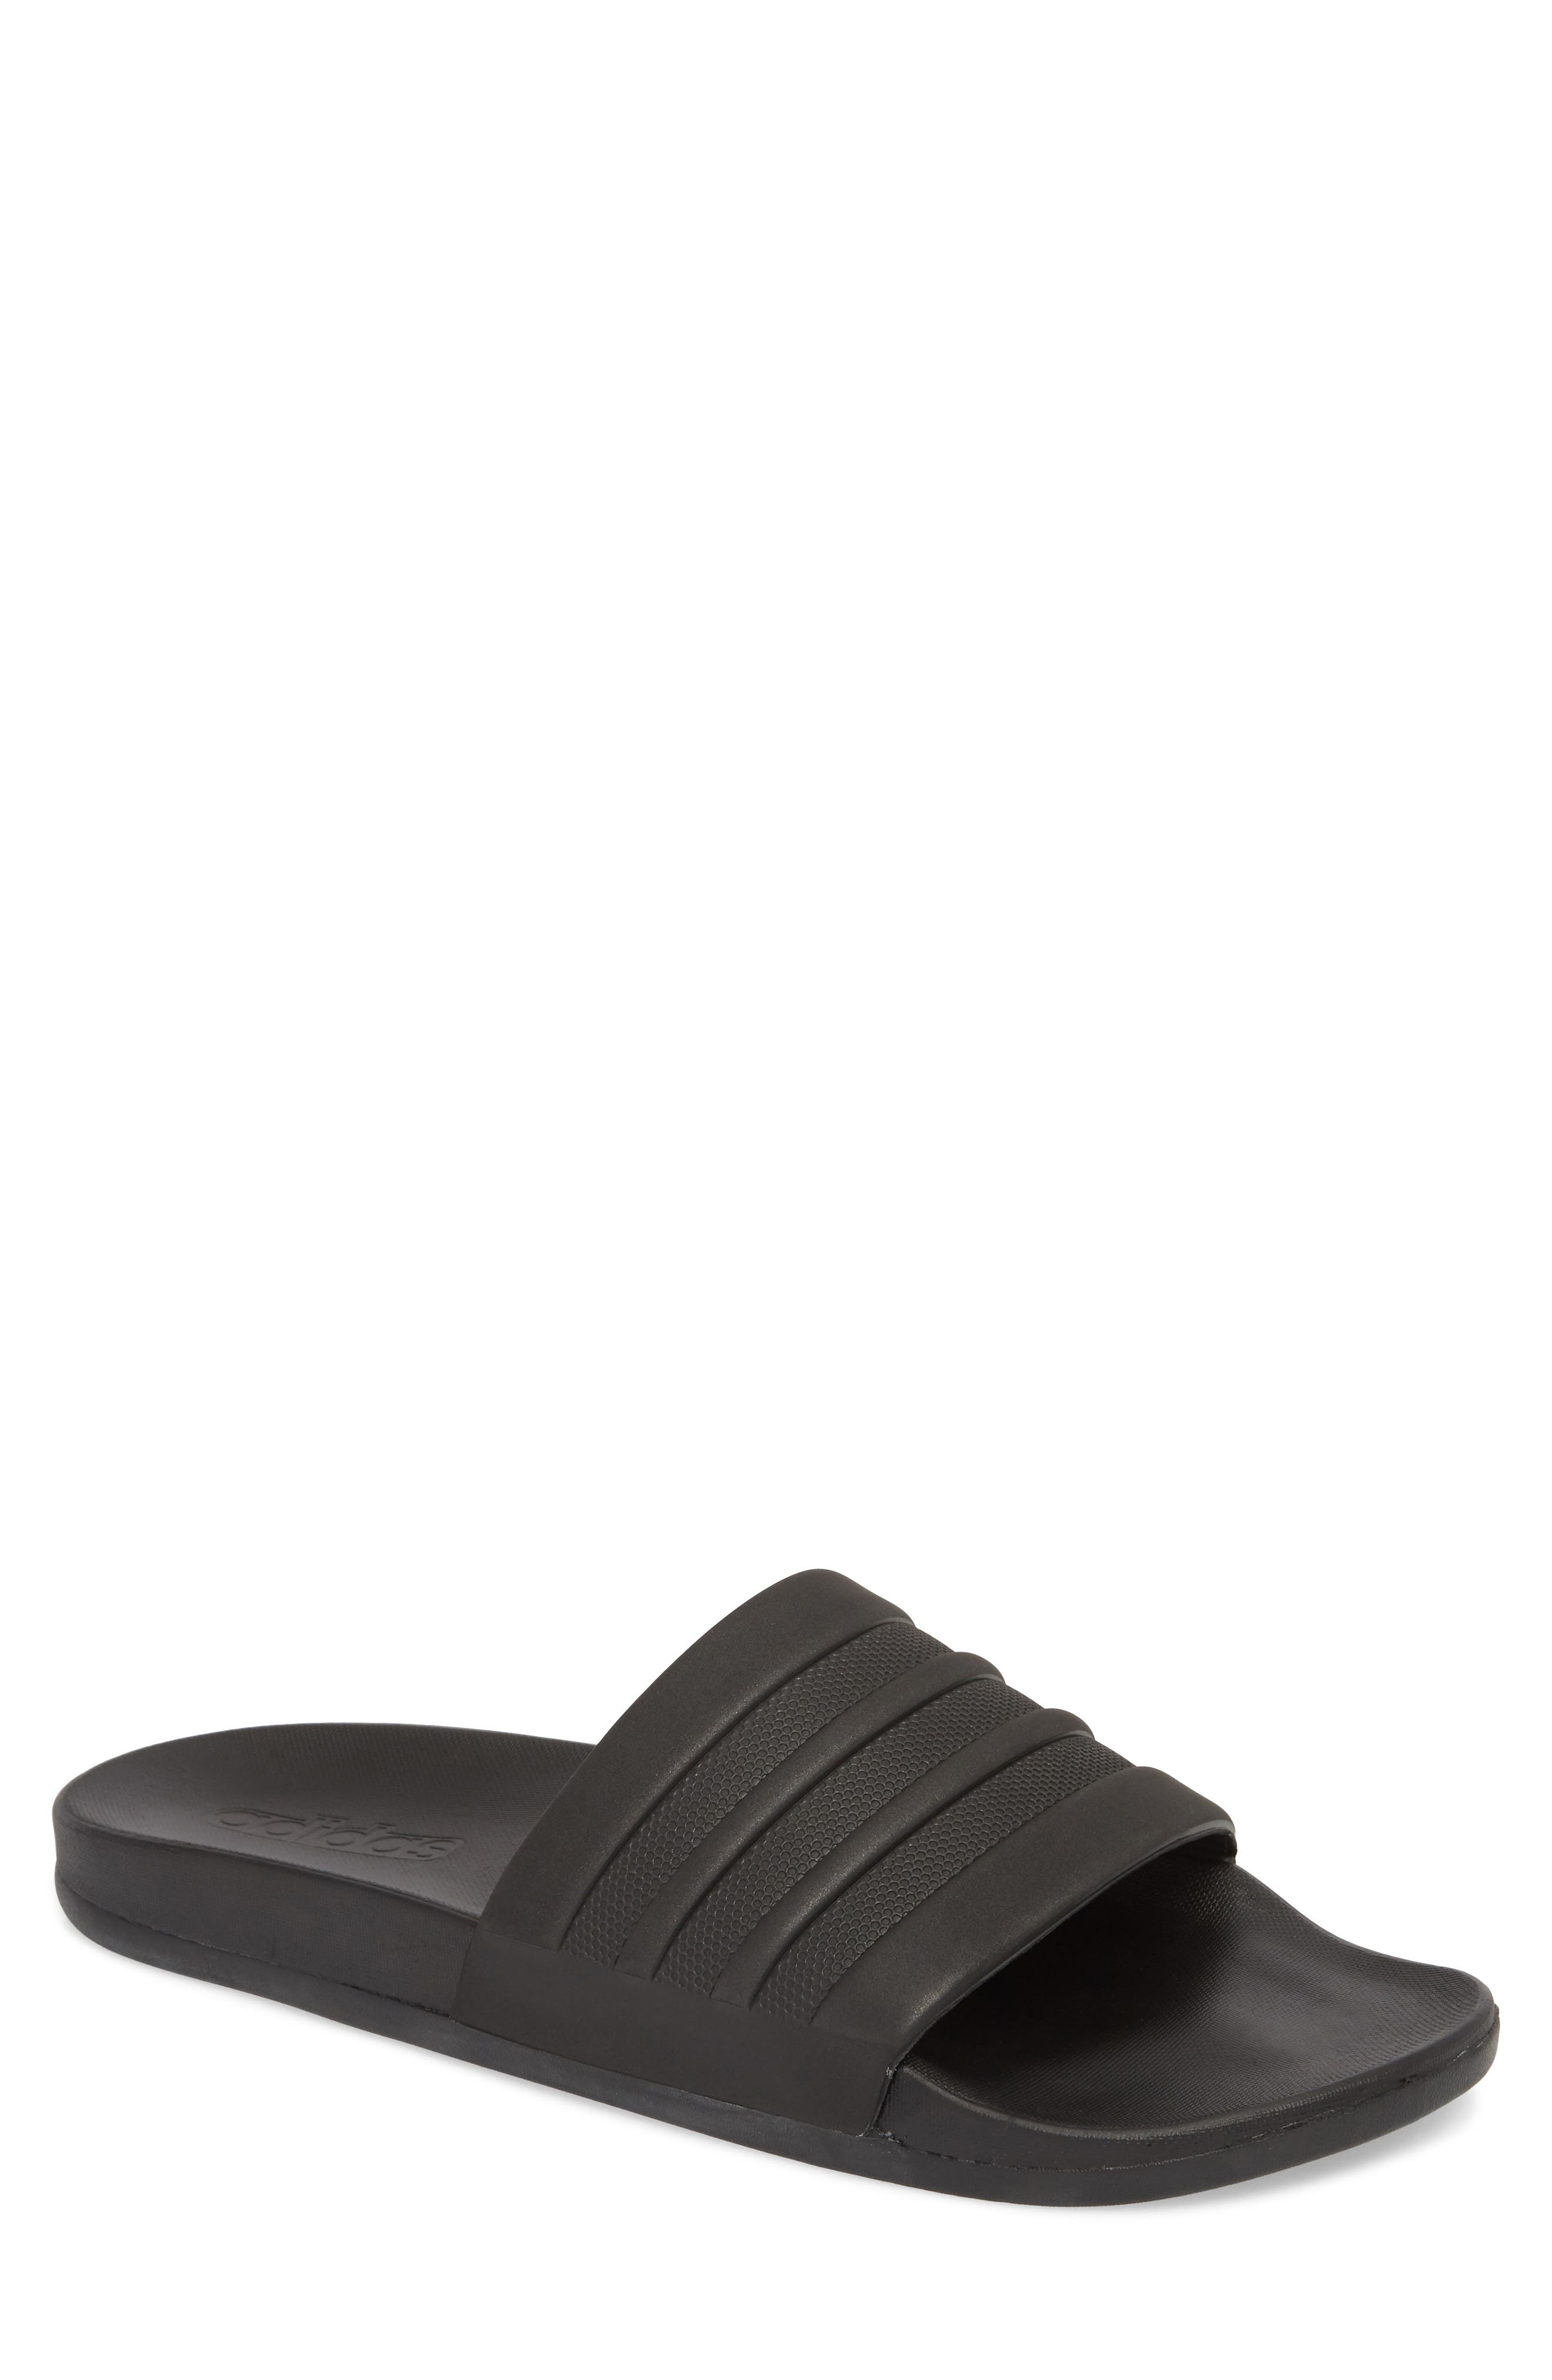 adidas adilette cloudfoam slippers